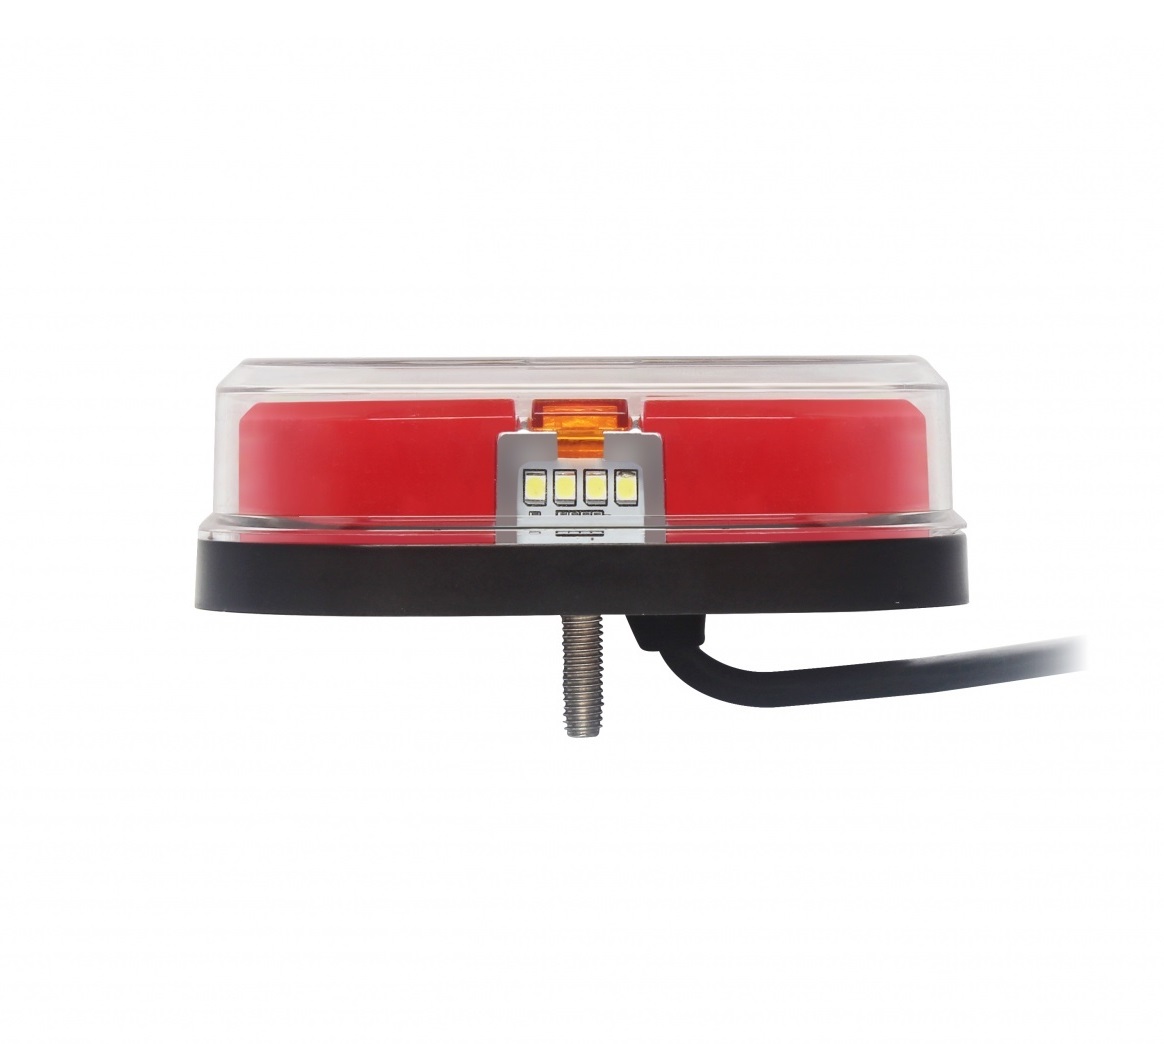 LED Neon Tail Rear Trailer Truck Lorry Light 5 functions 12v 24v